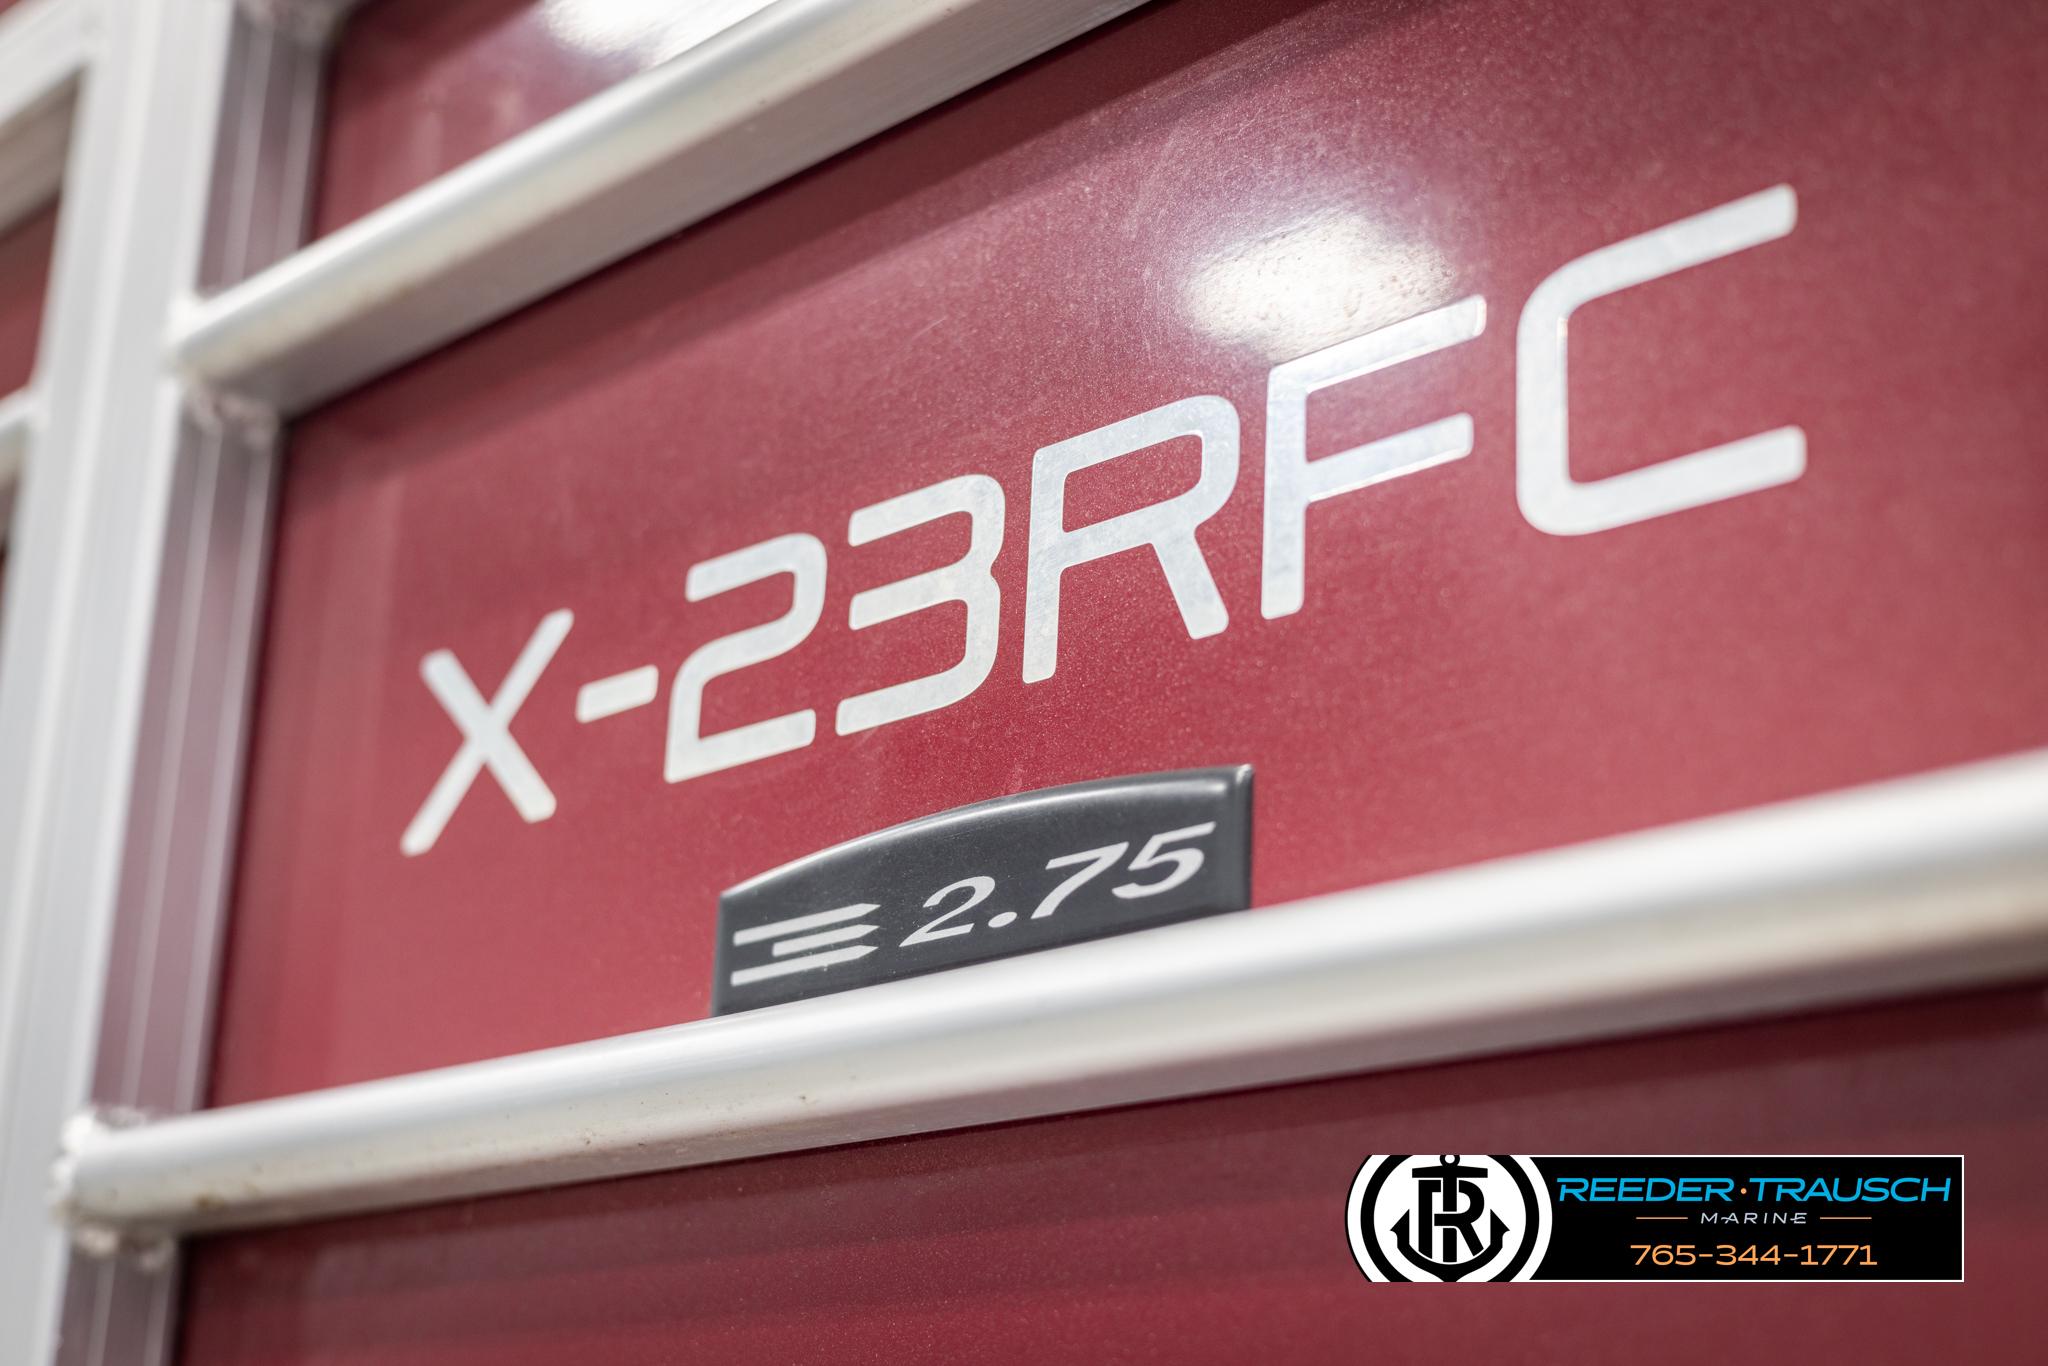 2015 Xcursion X-23 RFC